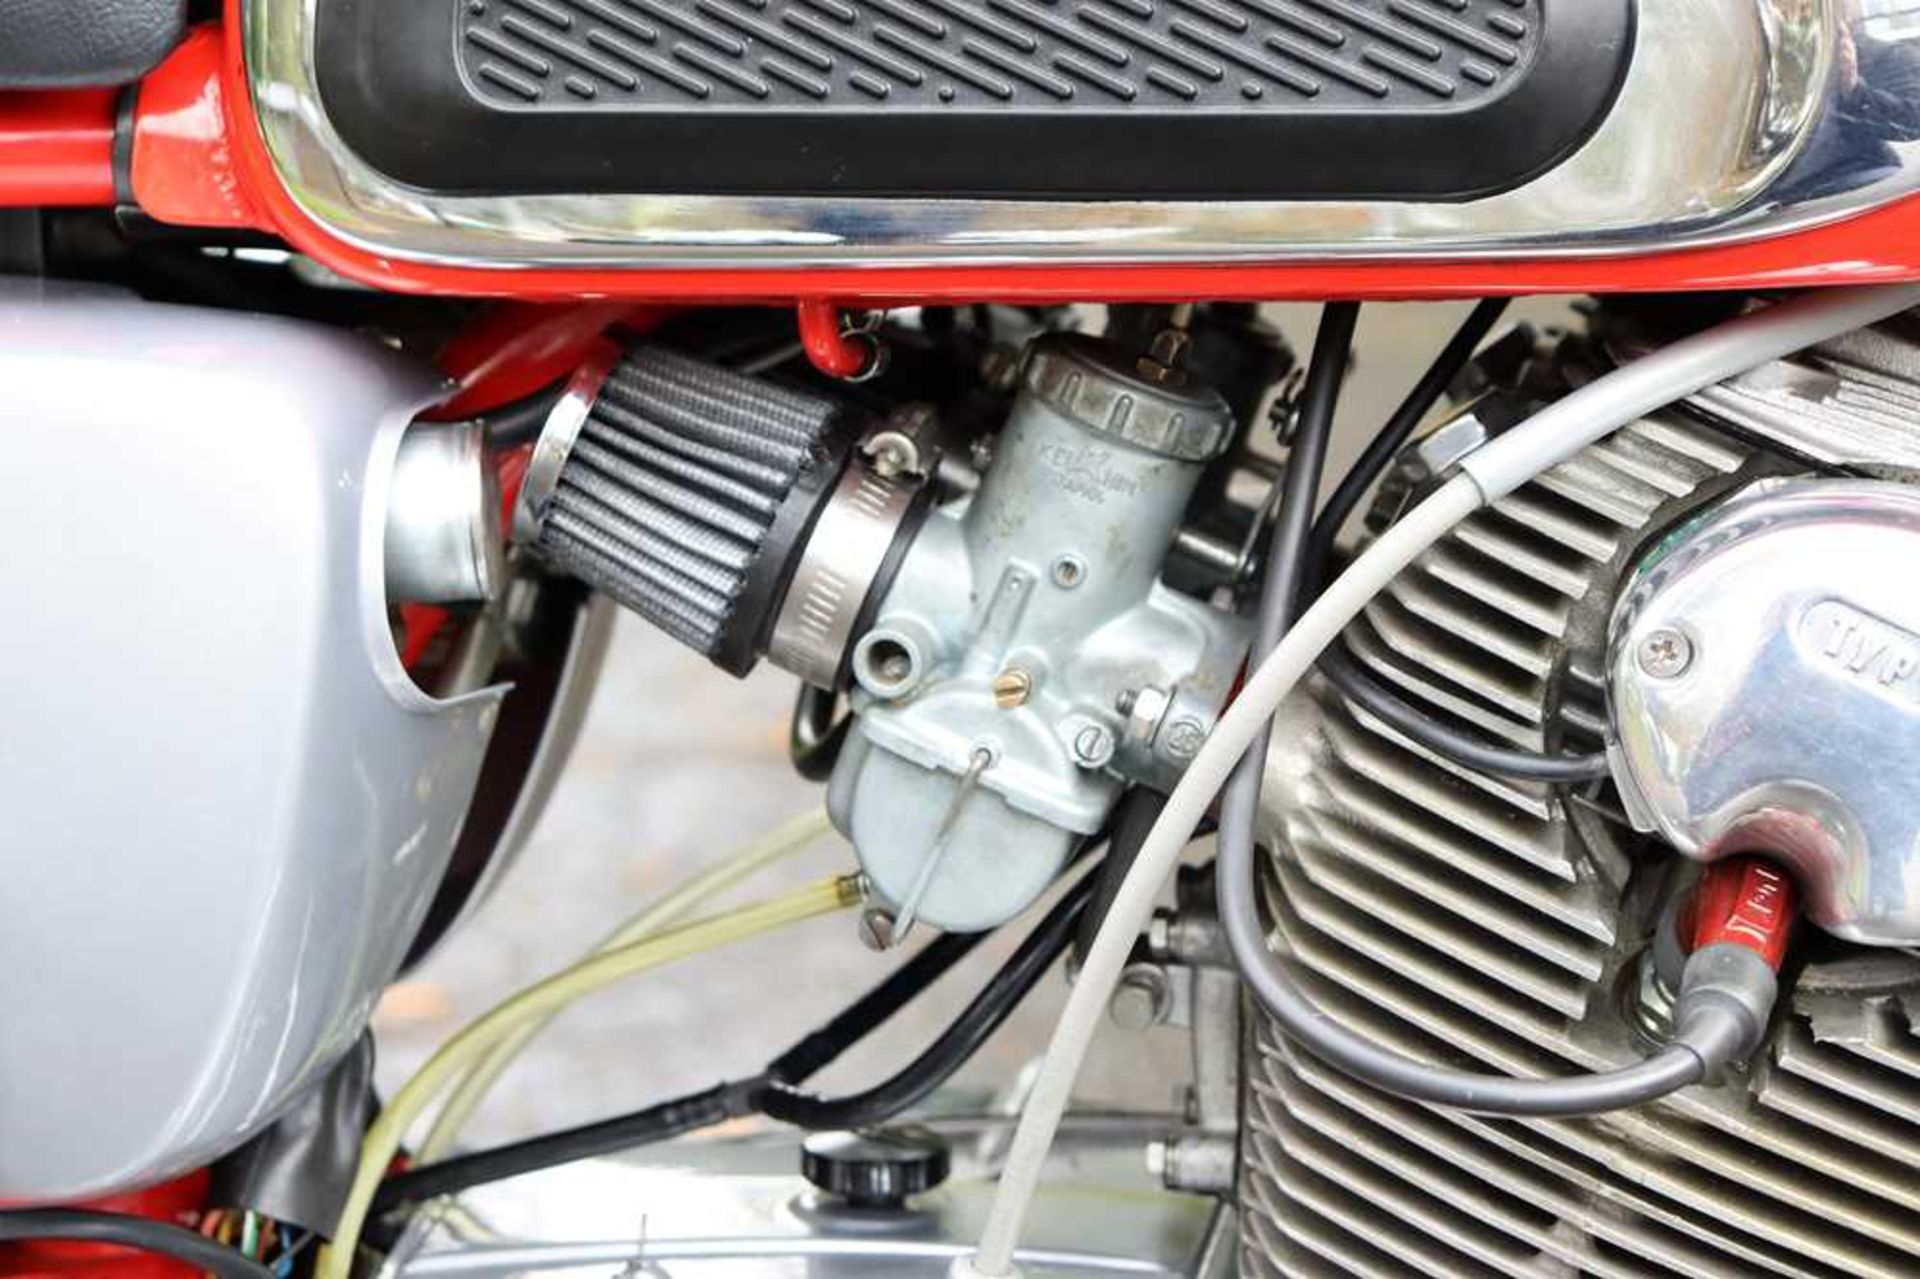 1966 Honda CB77 Restored to a high standard - Image 17 of 65